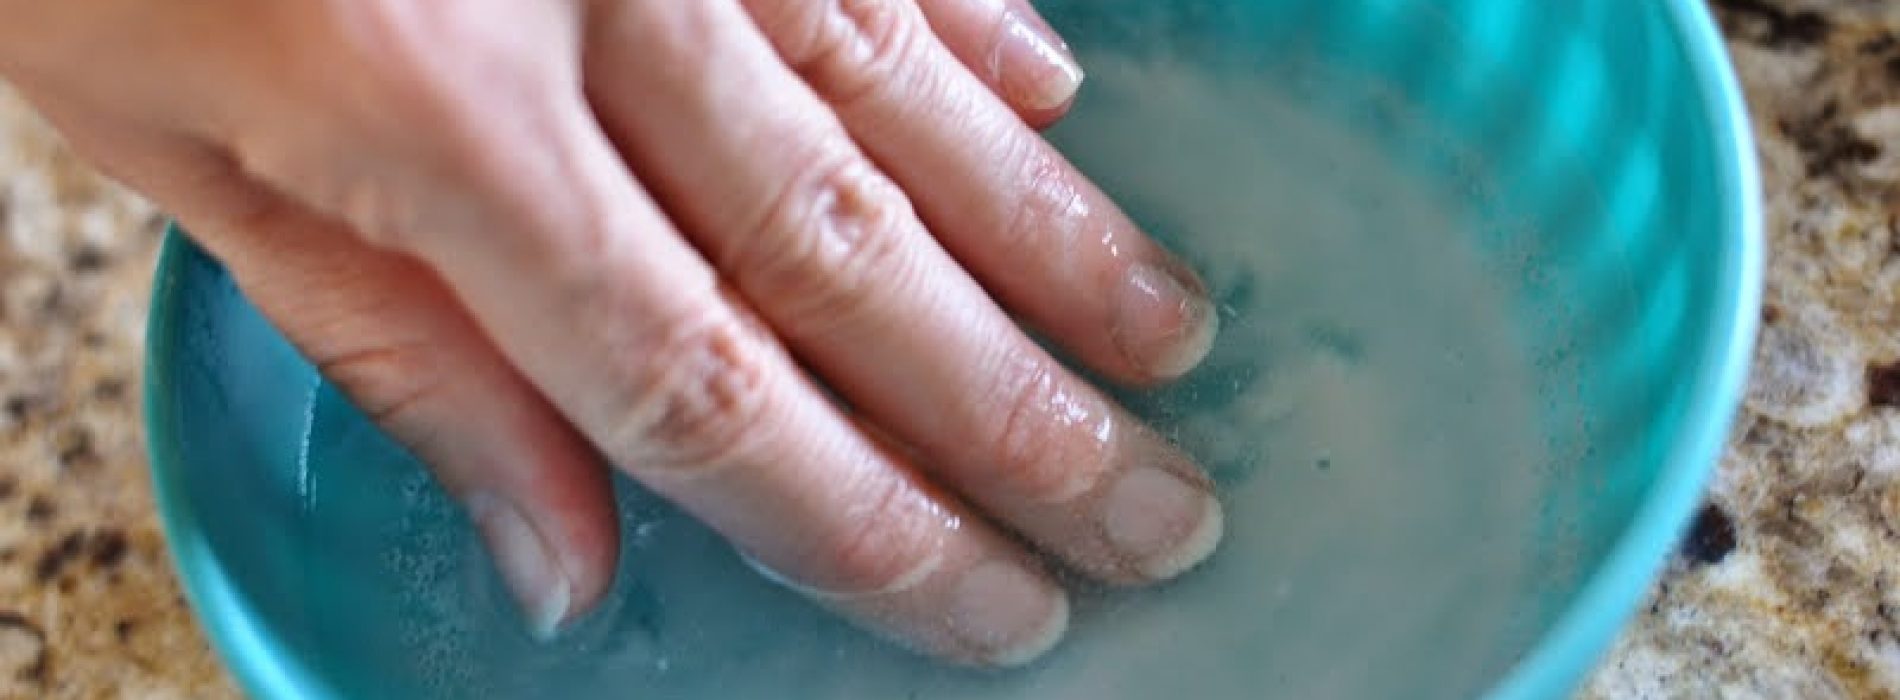 Last van zwakke broze nagels? Dit middeltje zal je nagels sterker maken!